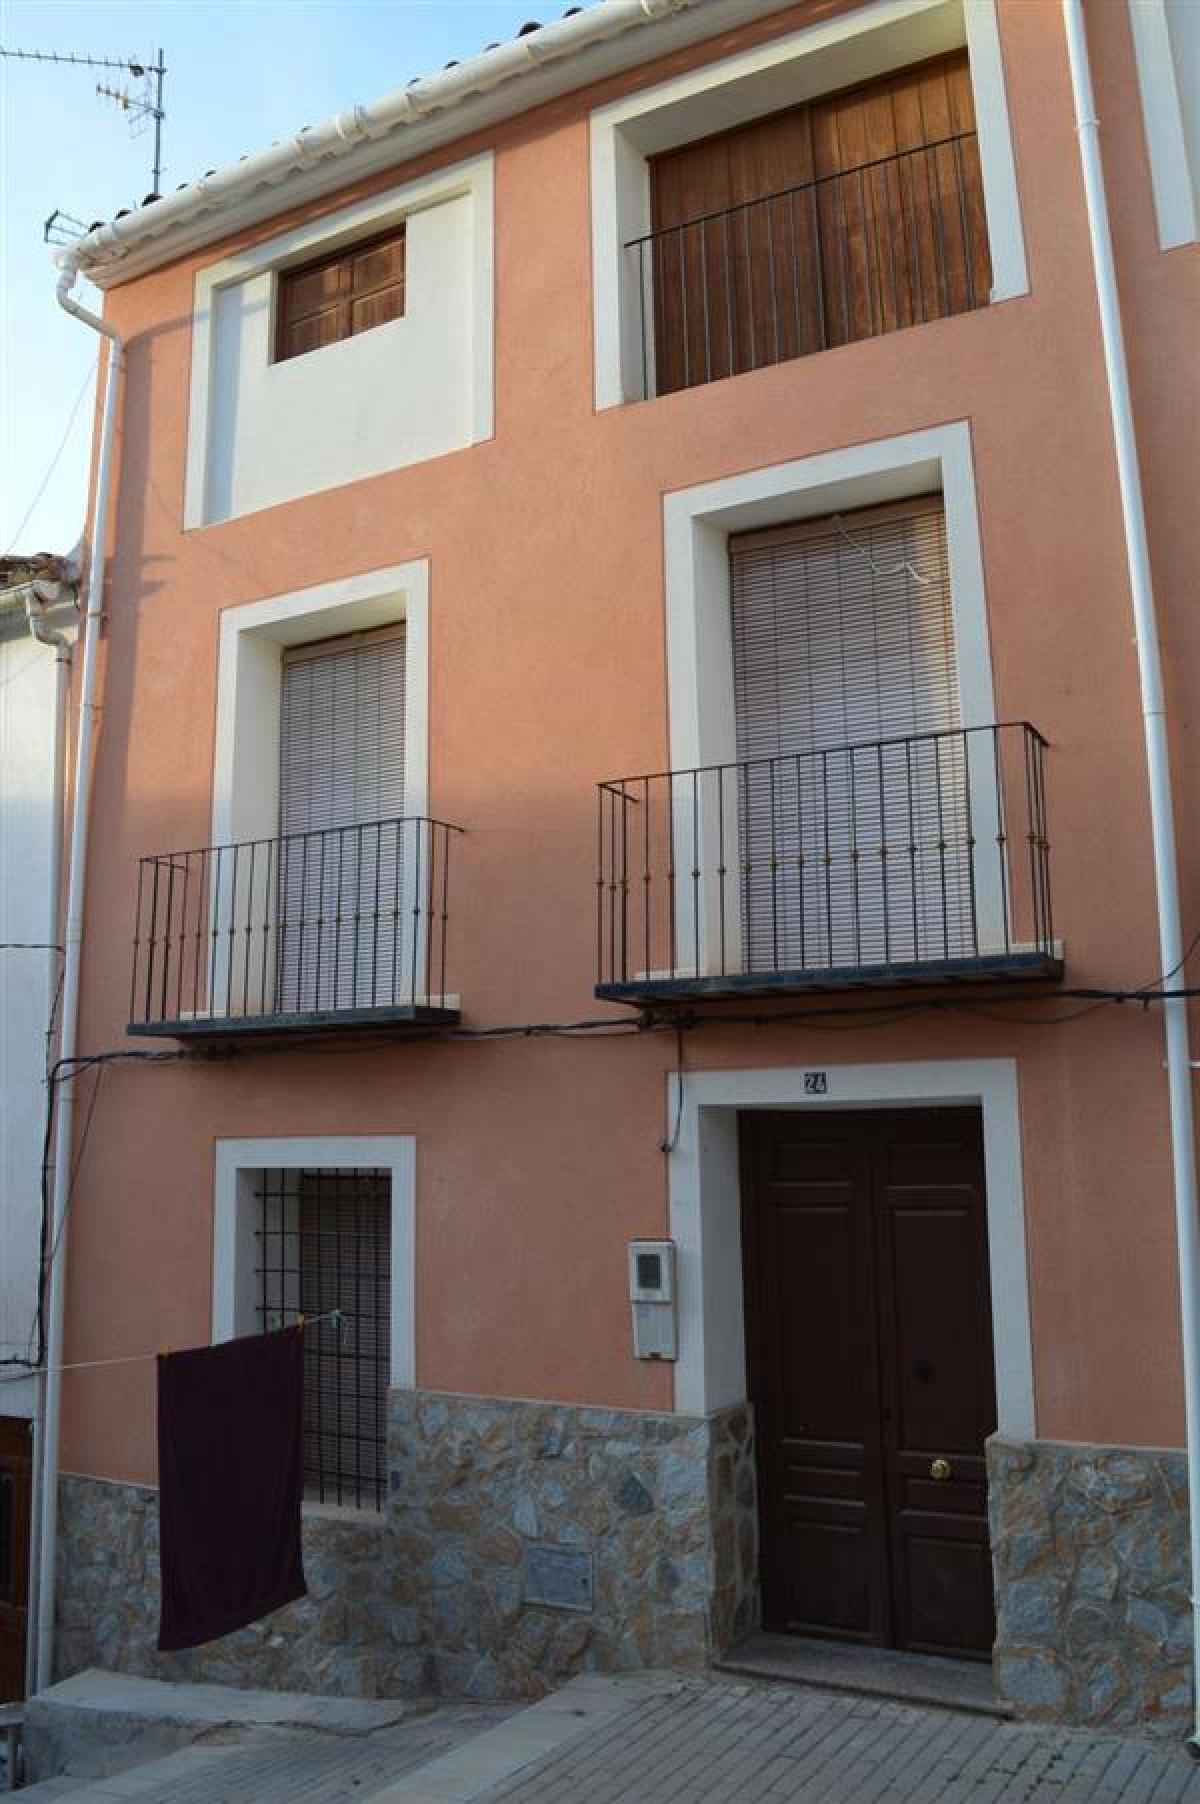 Picture of Home For Sale in Costa Blanca North, Alicante, Spain